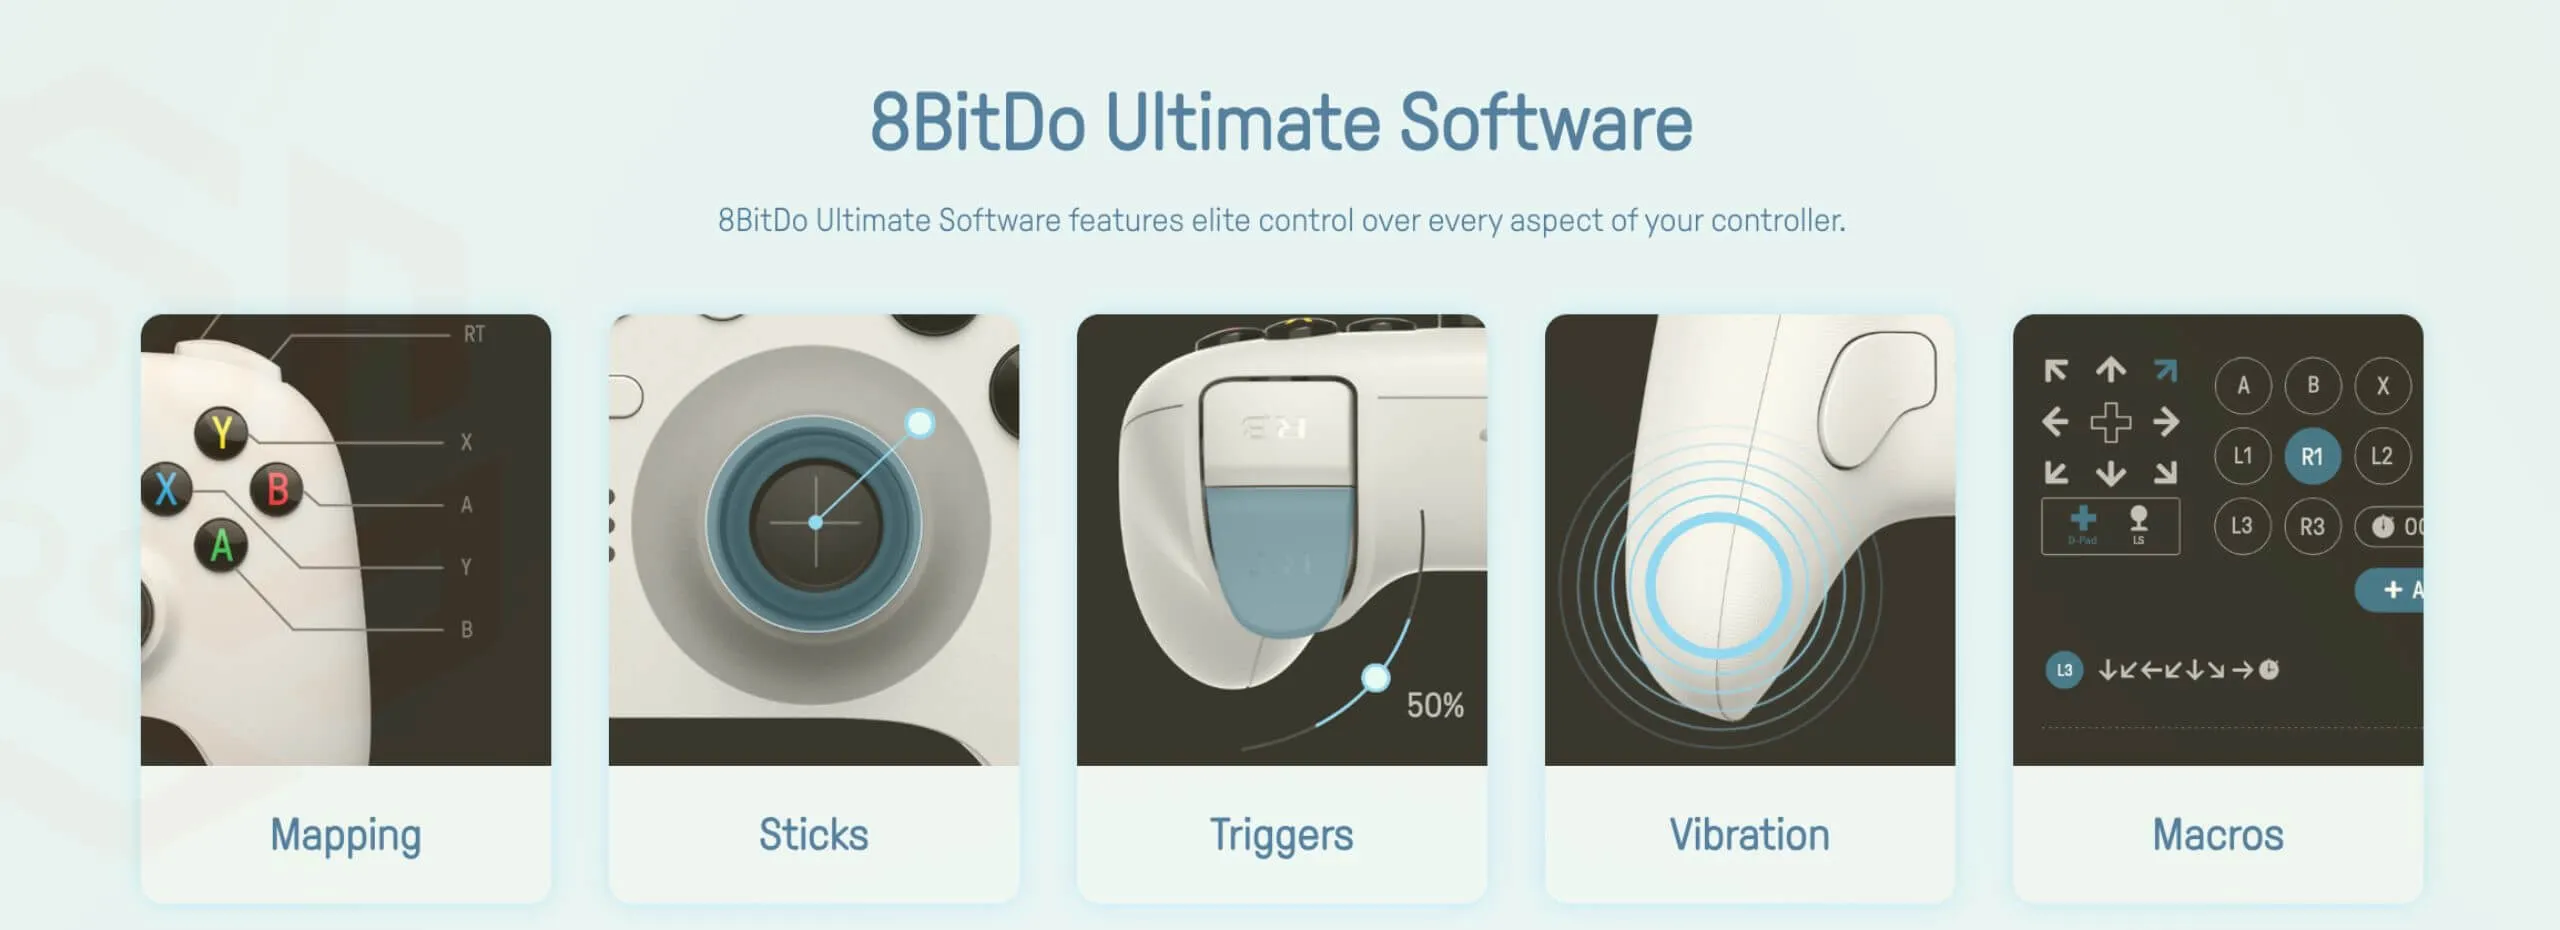 8Bitdo ultimate software